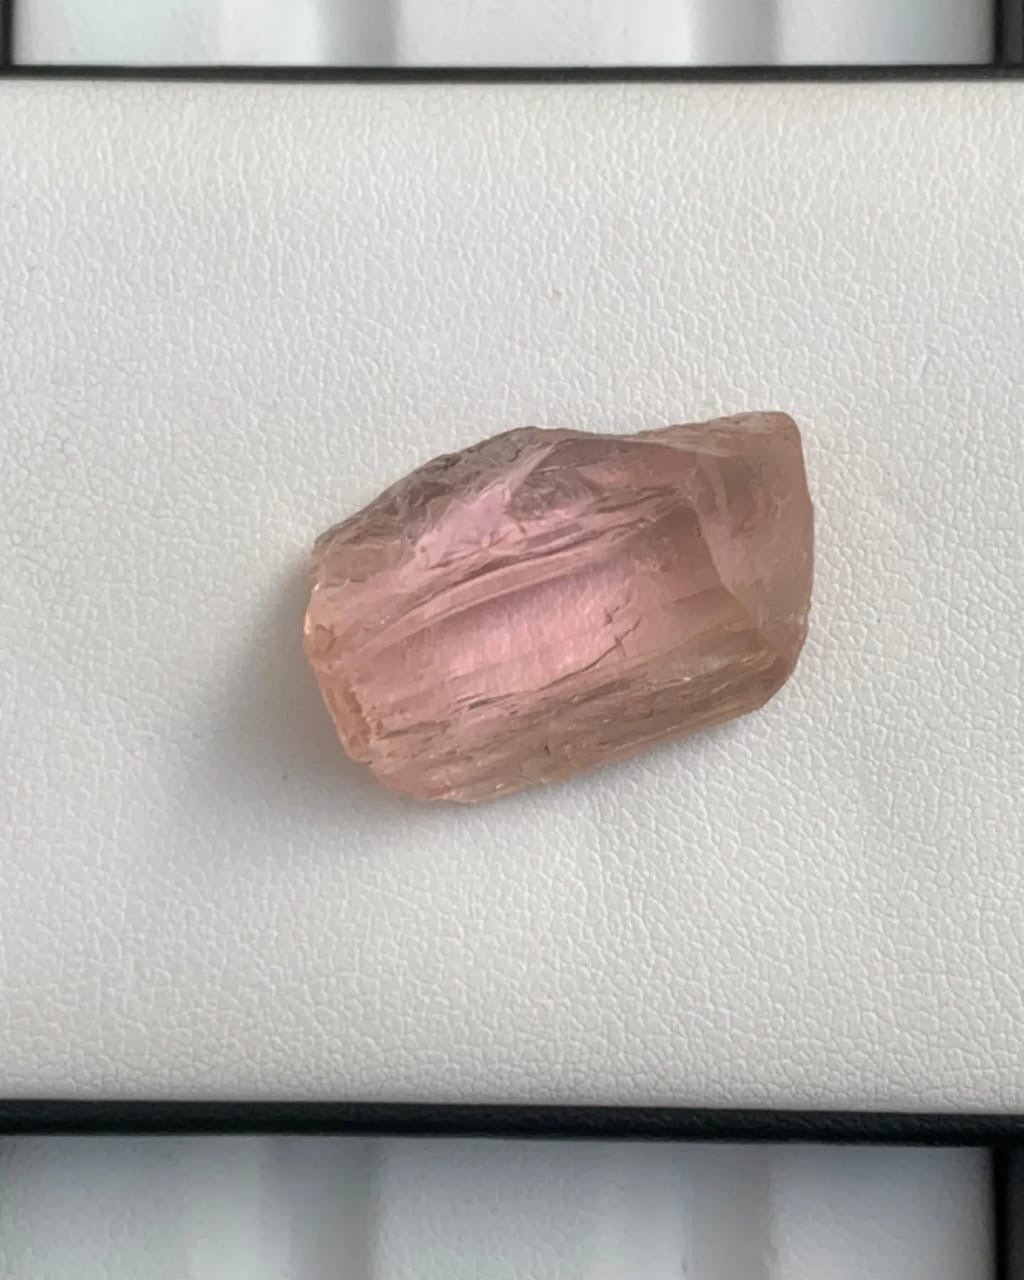 35 carat rare pink rough topaz crystal | Katlang Topaz | Imperial Topaz